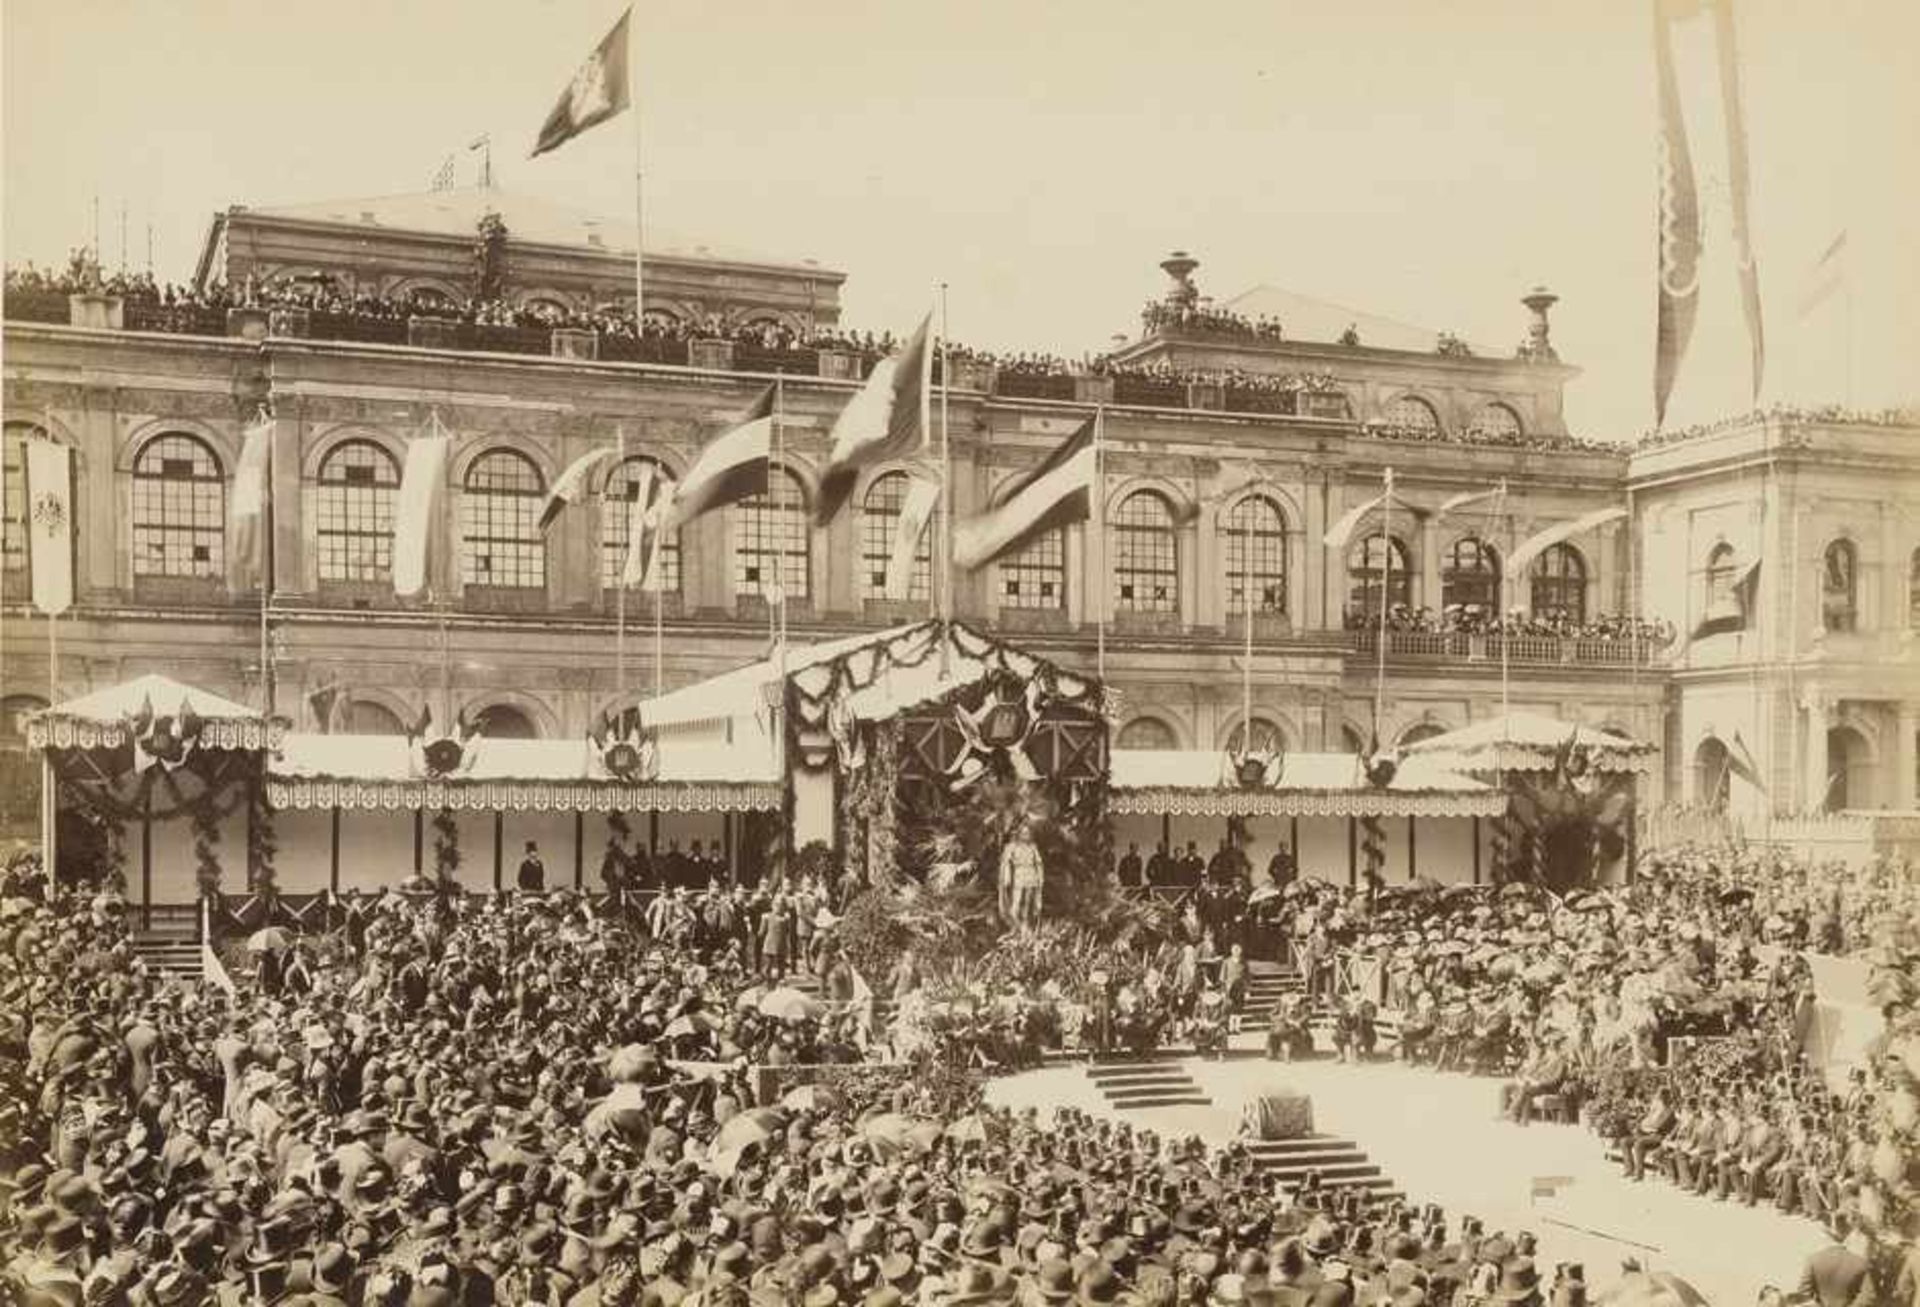 Koppmann, Georg: Views of HamburgViews of important events in Hamburg. 1884 - 1888. 4 large-format